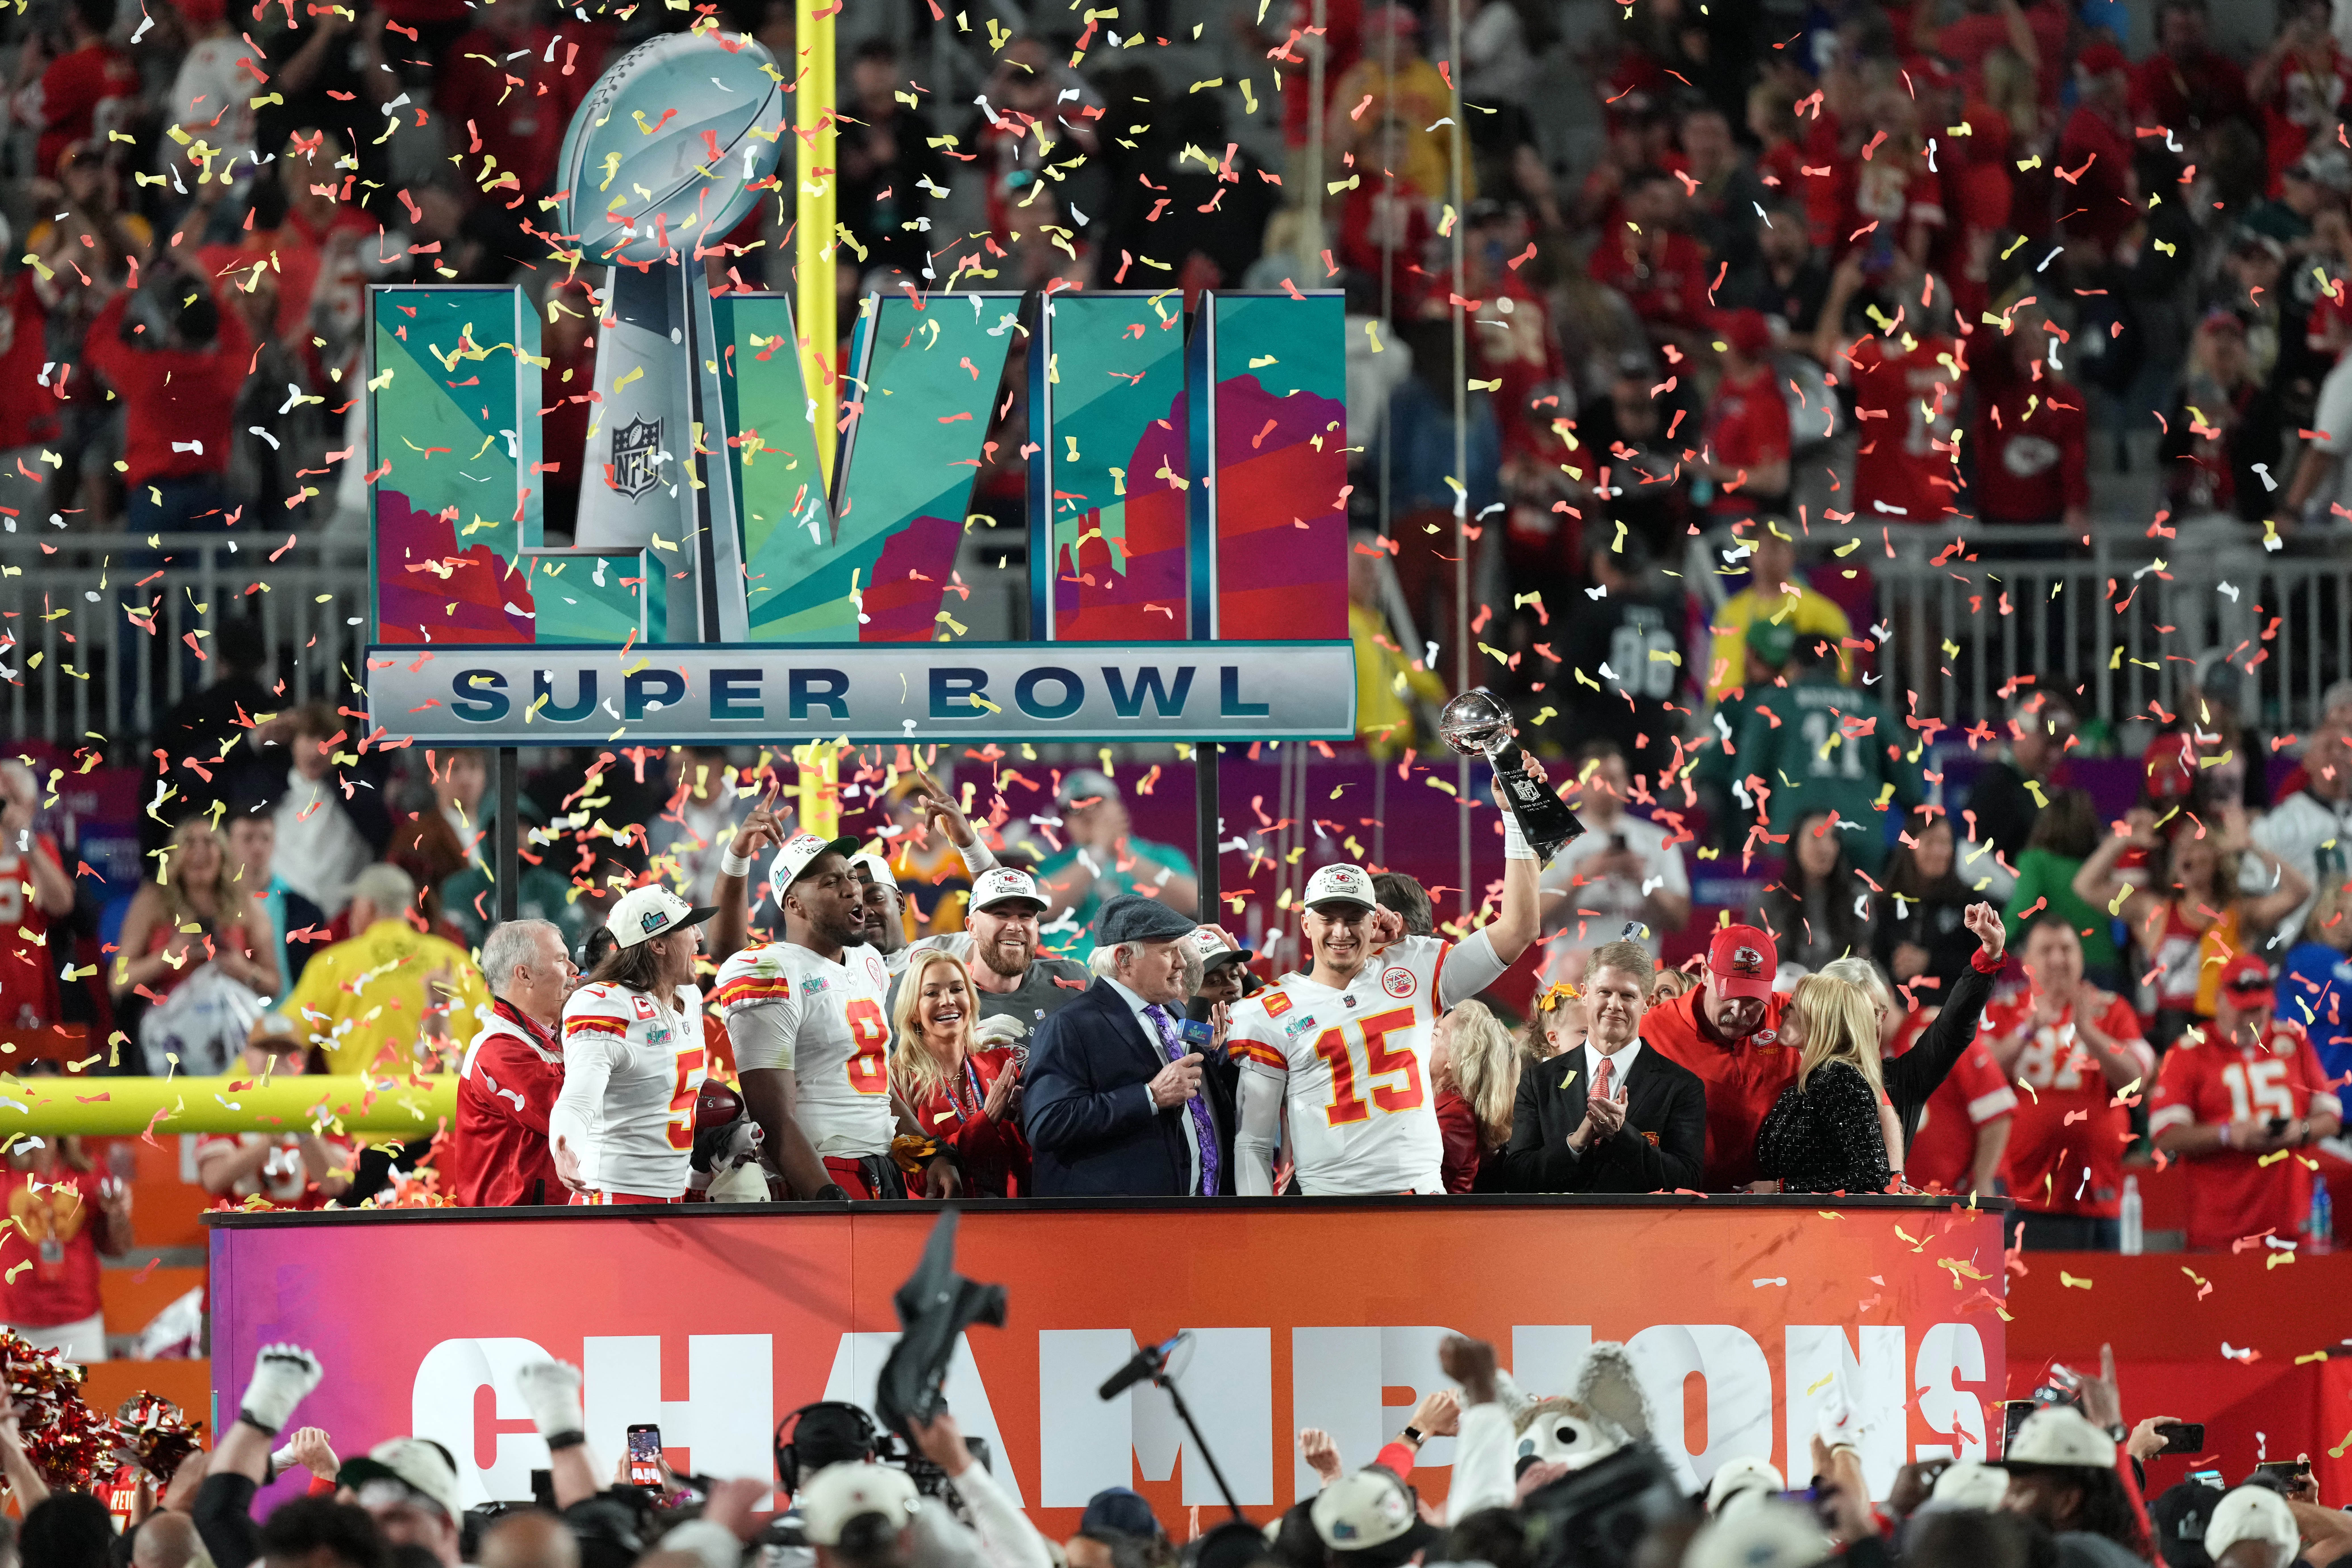 Patrick Mahomes leads Kansas City Chiefs to Super Bowl LVII